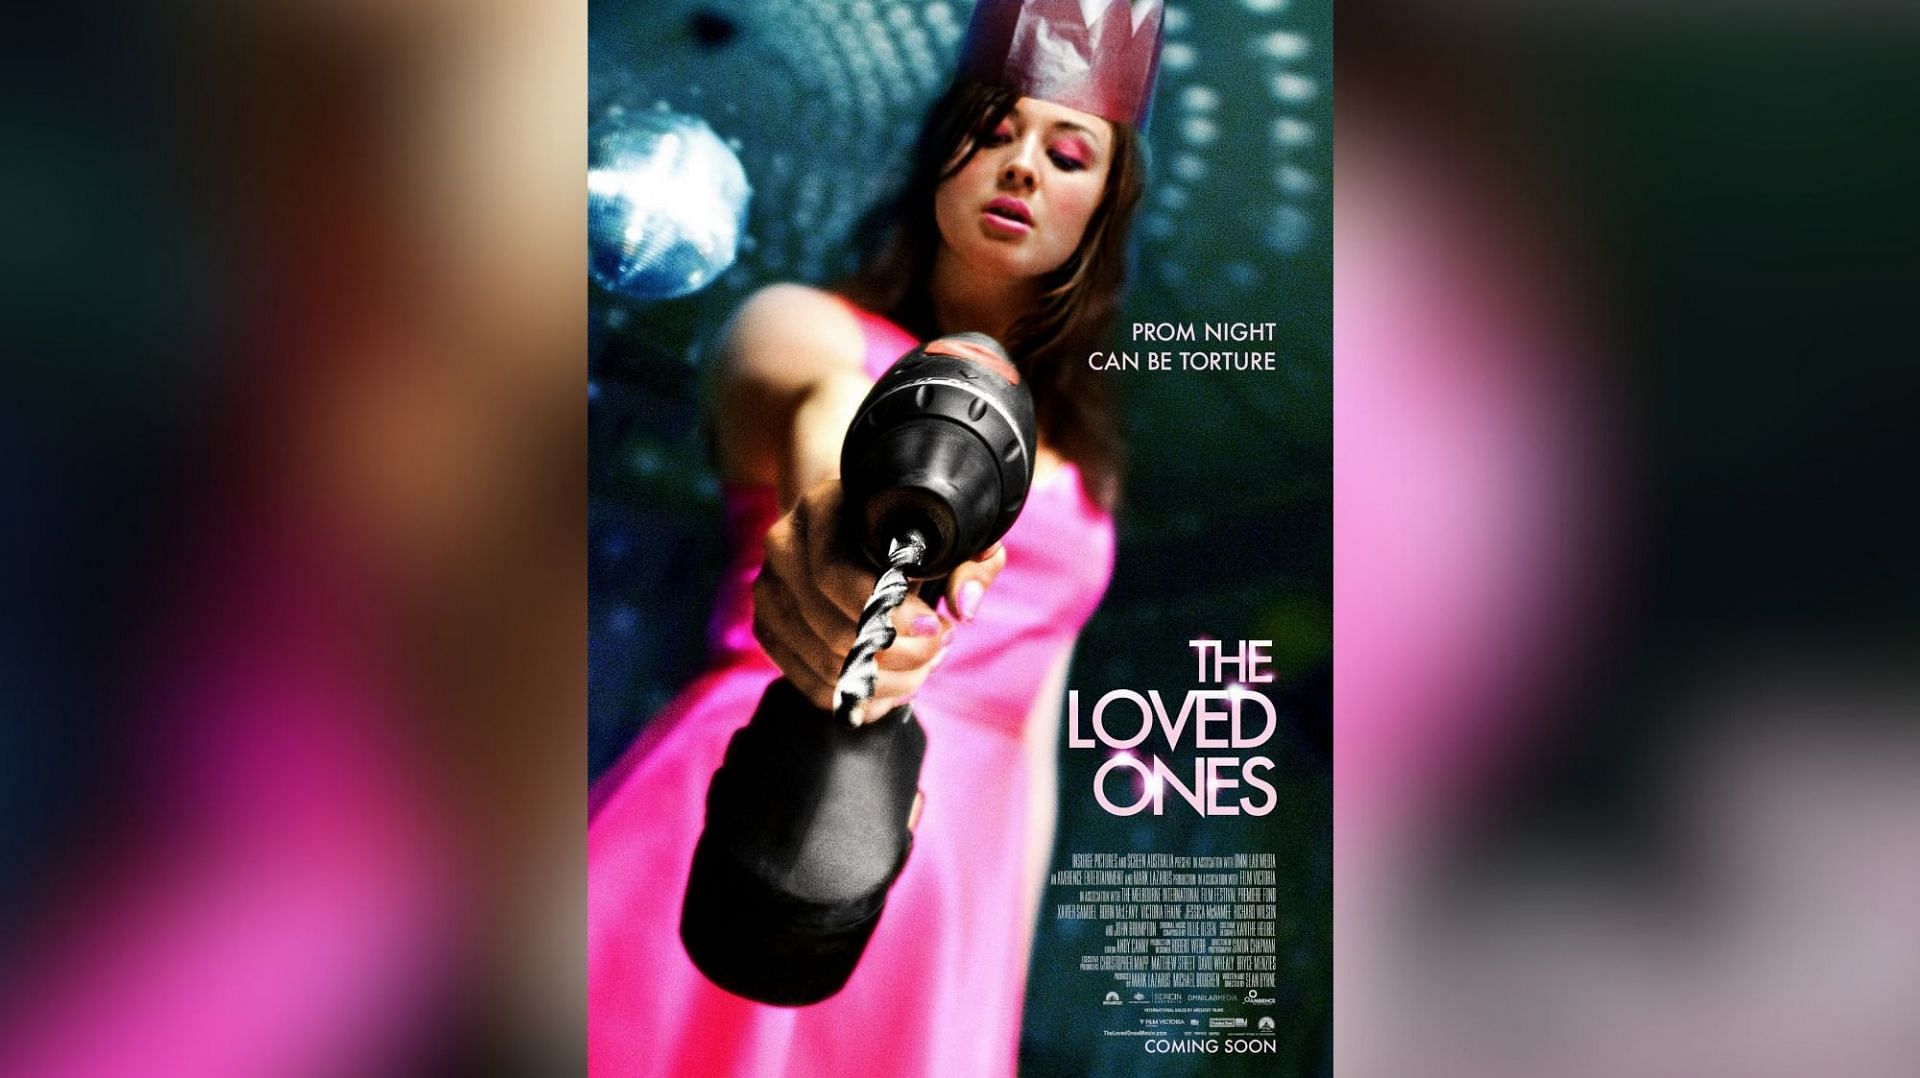 The Loved Ones (Image via Madman Films)